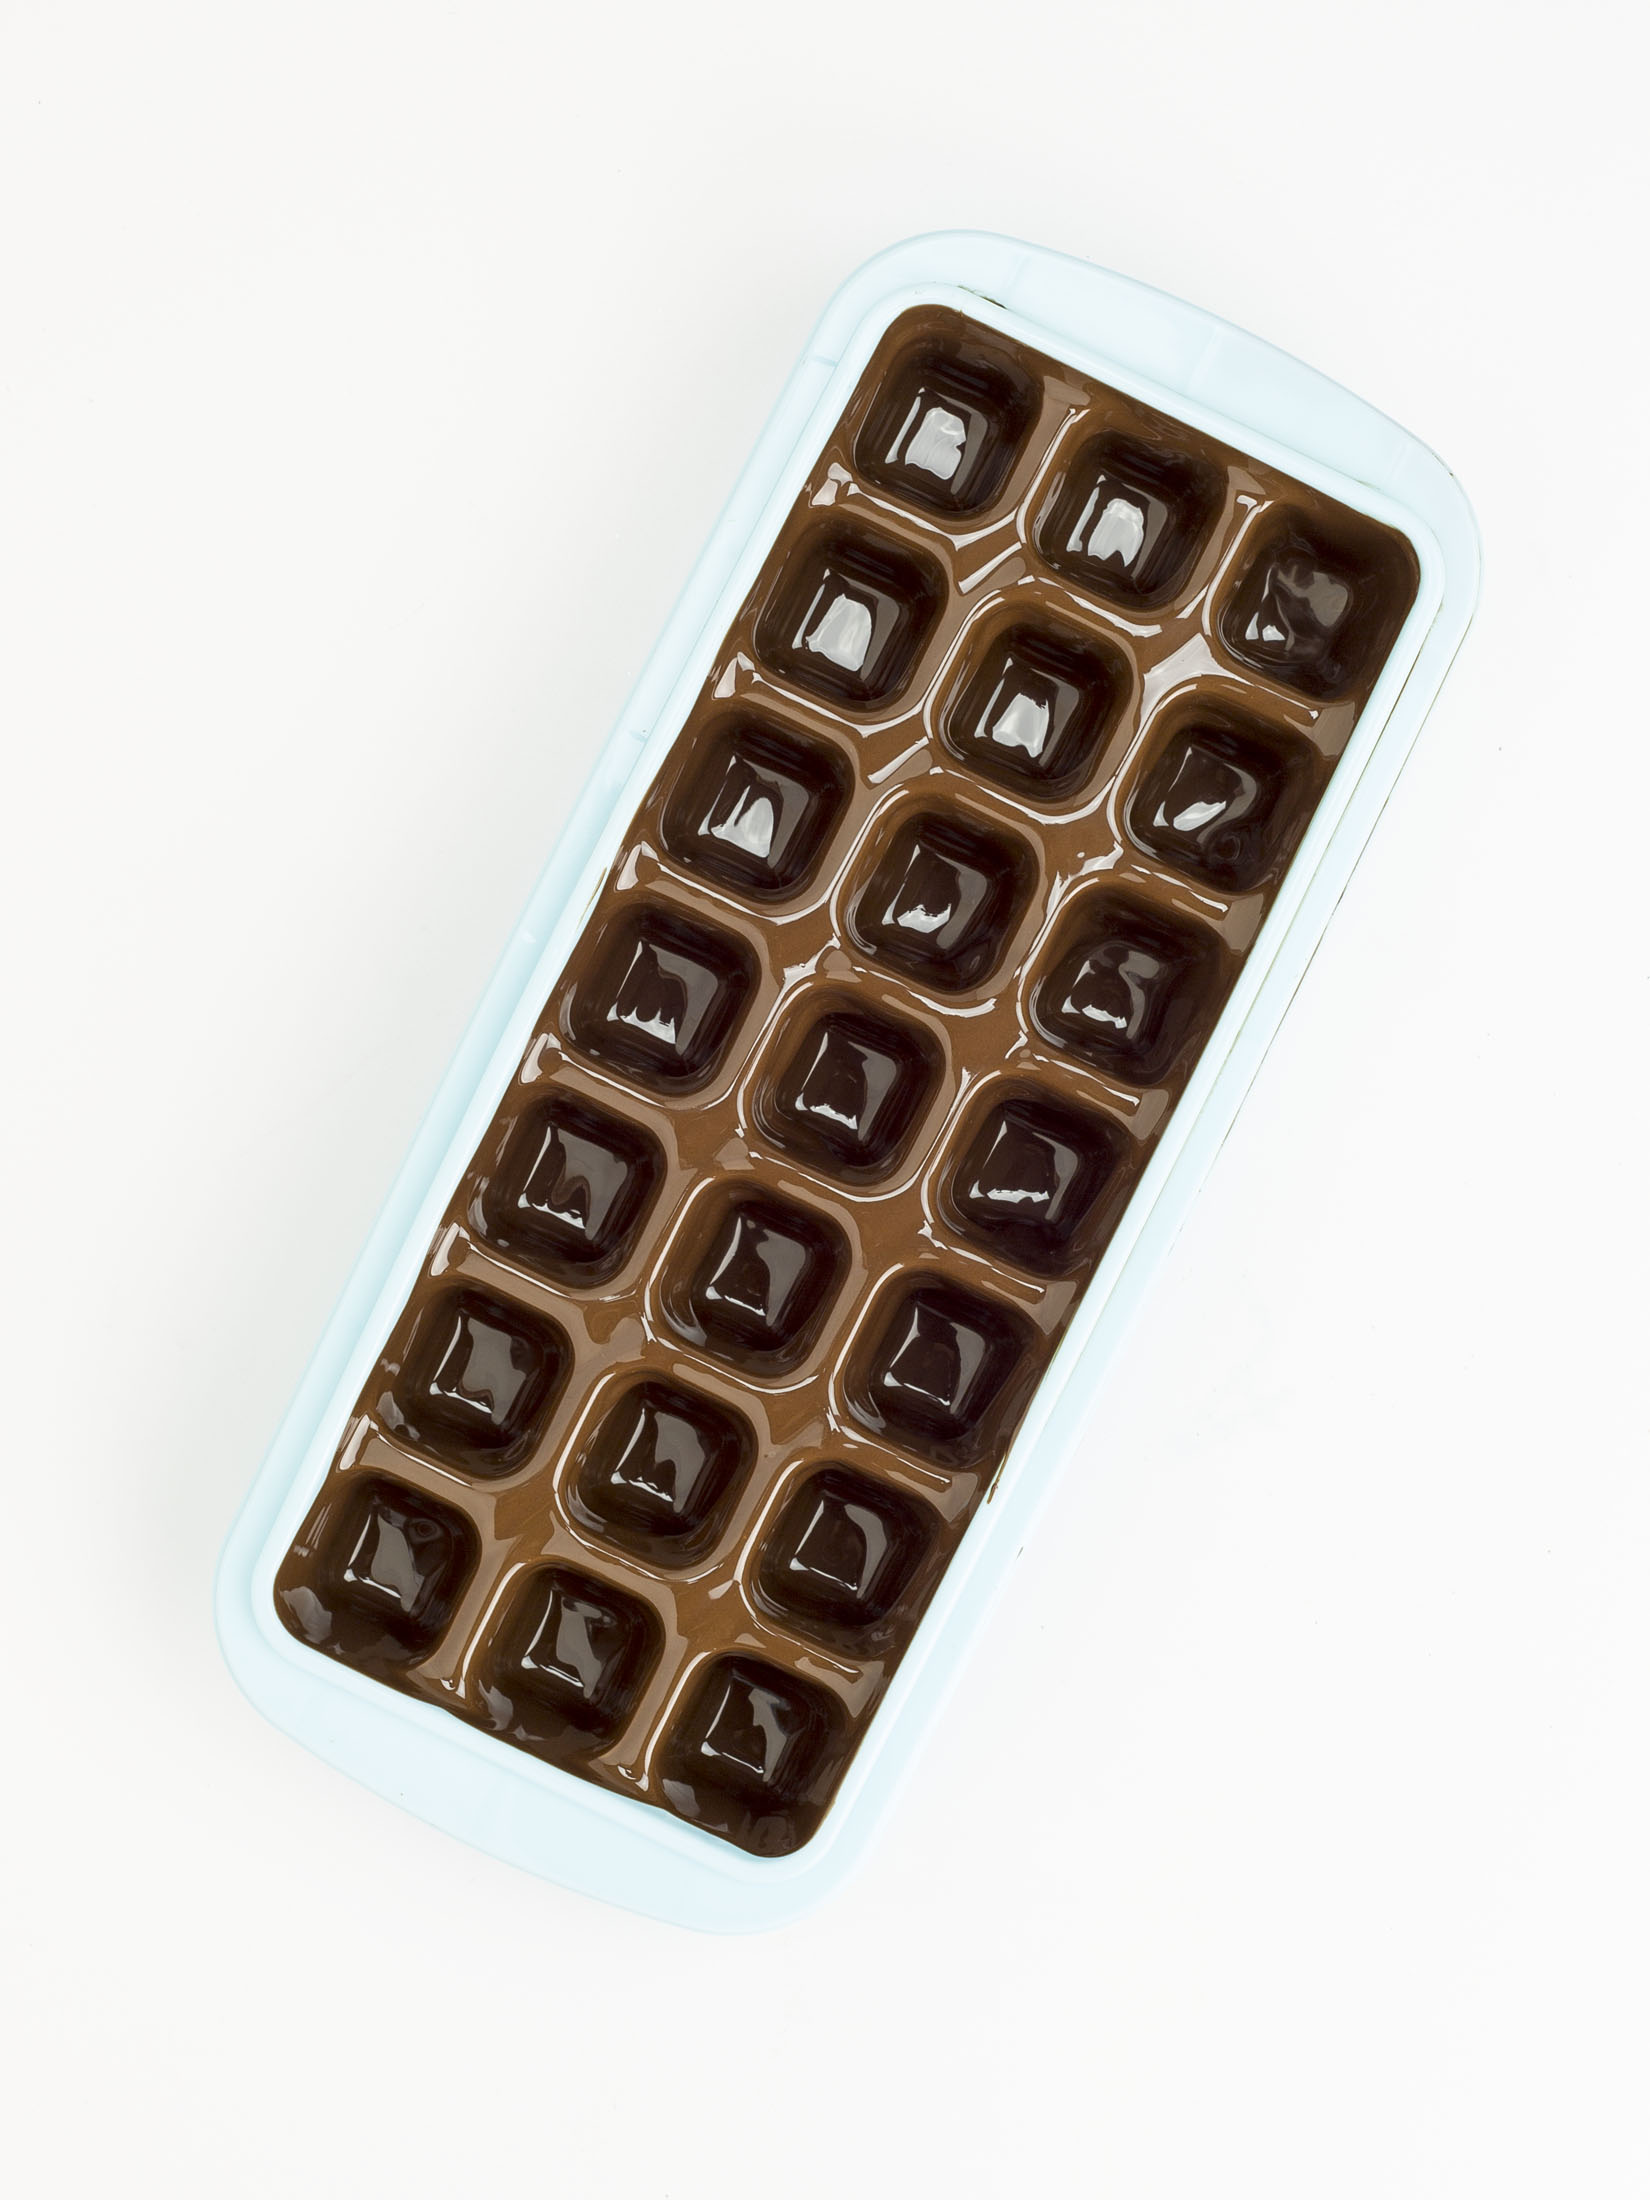 twistit recipe chocolate in ice cube tray